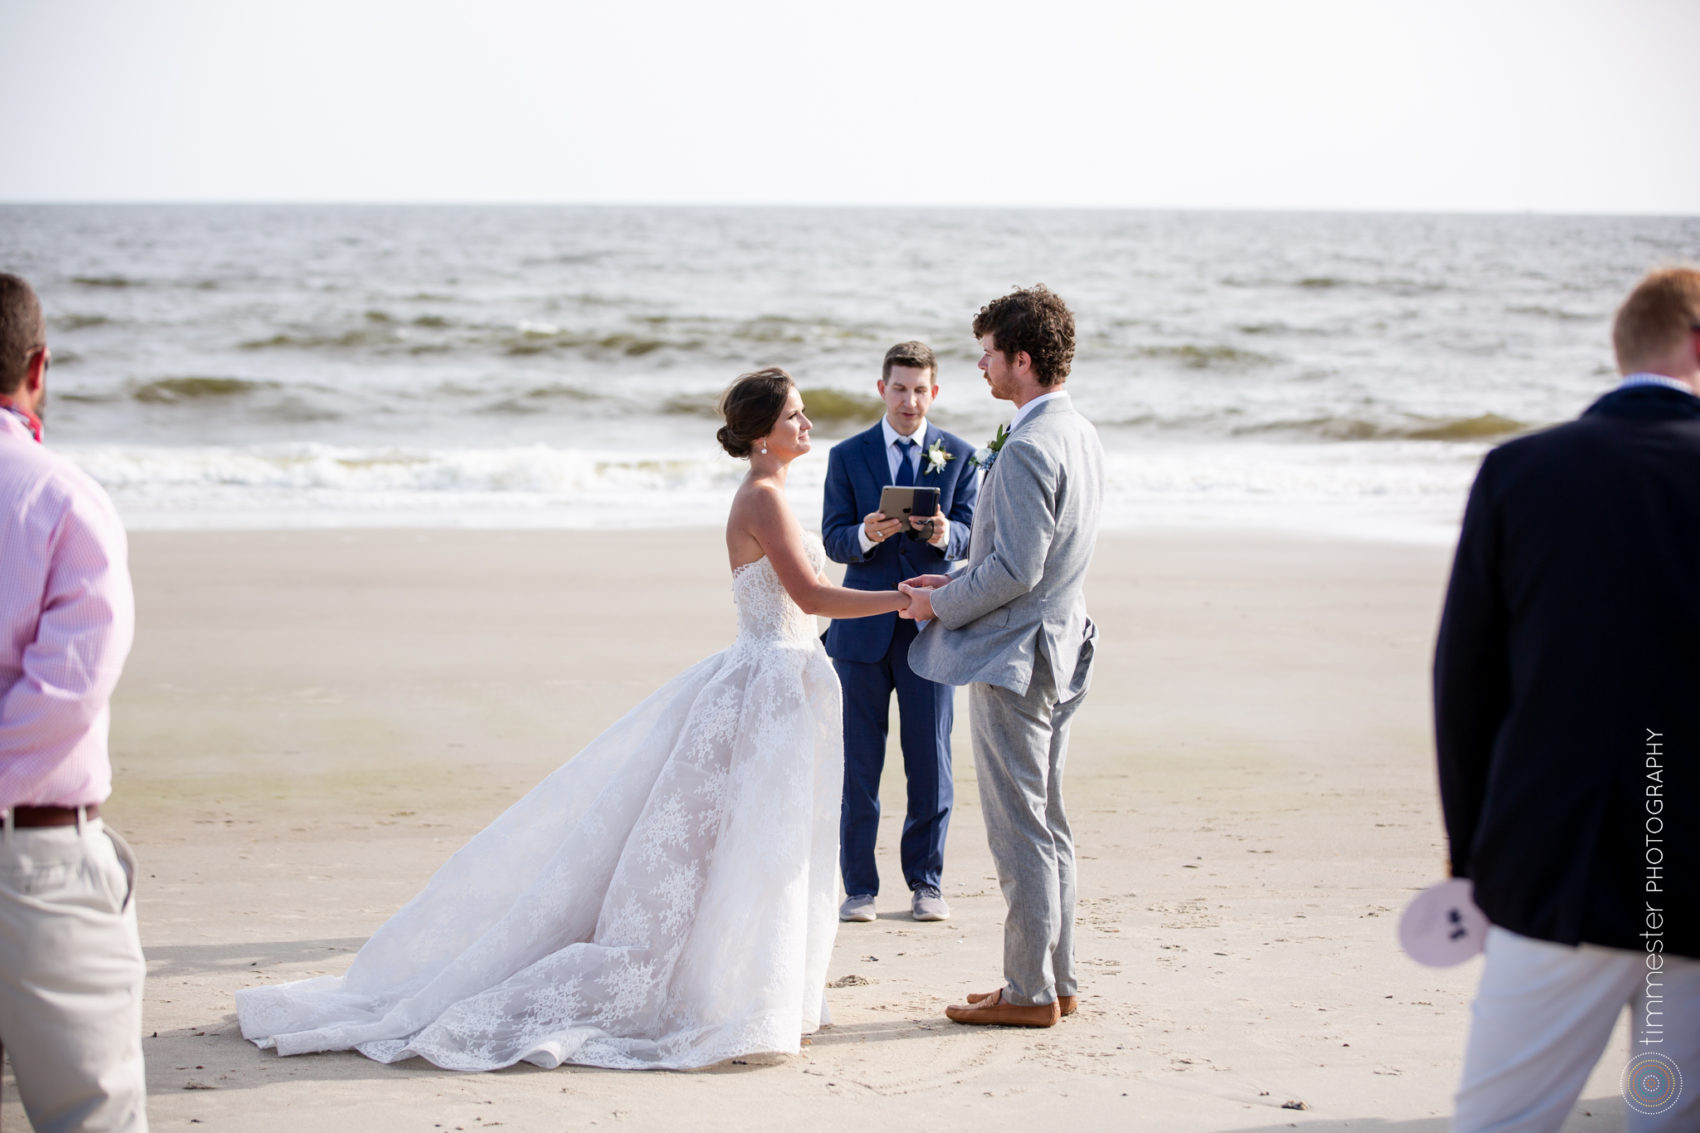 A beach wedding ceremony on Bald Head Island, NC